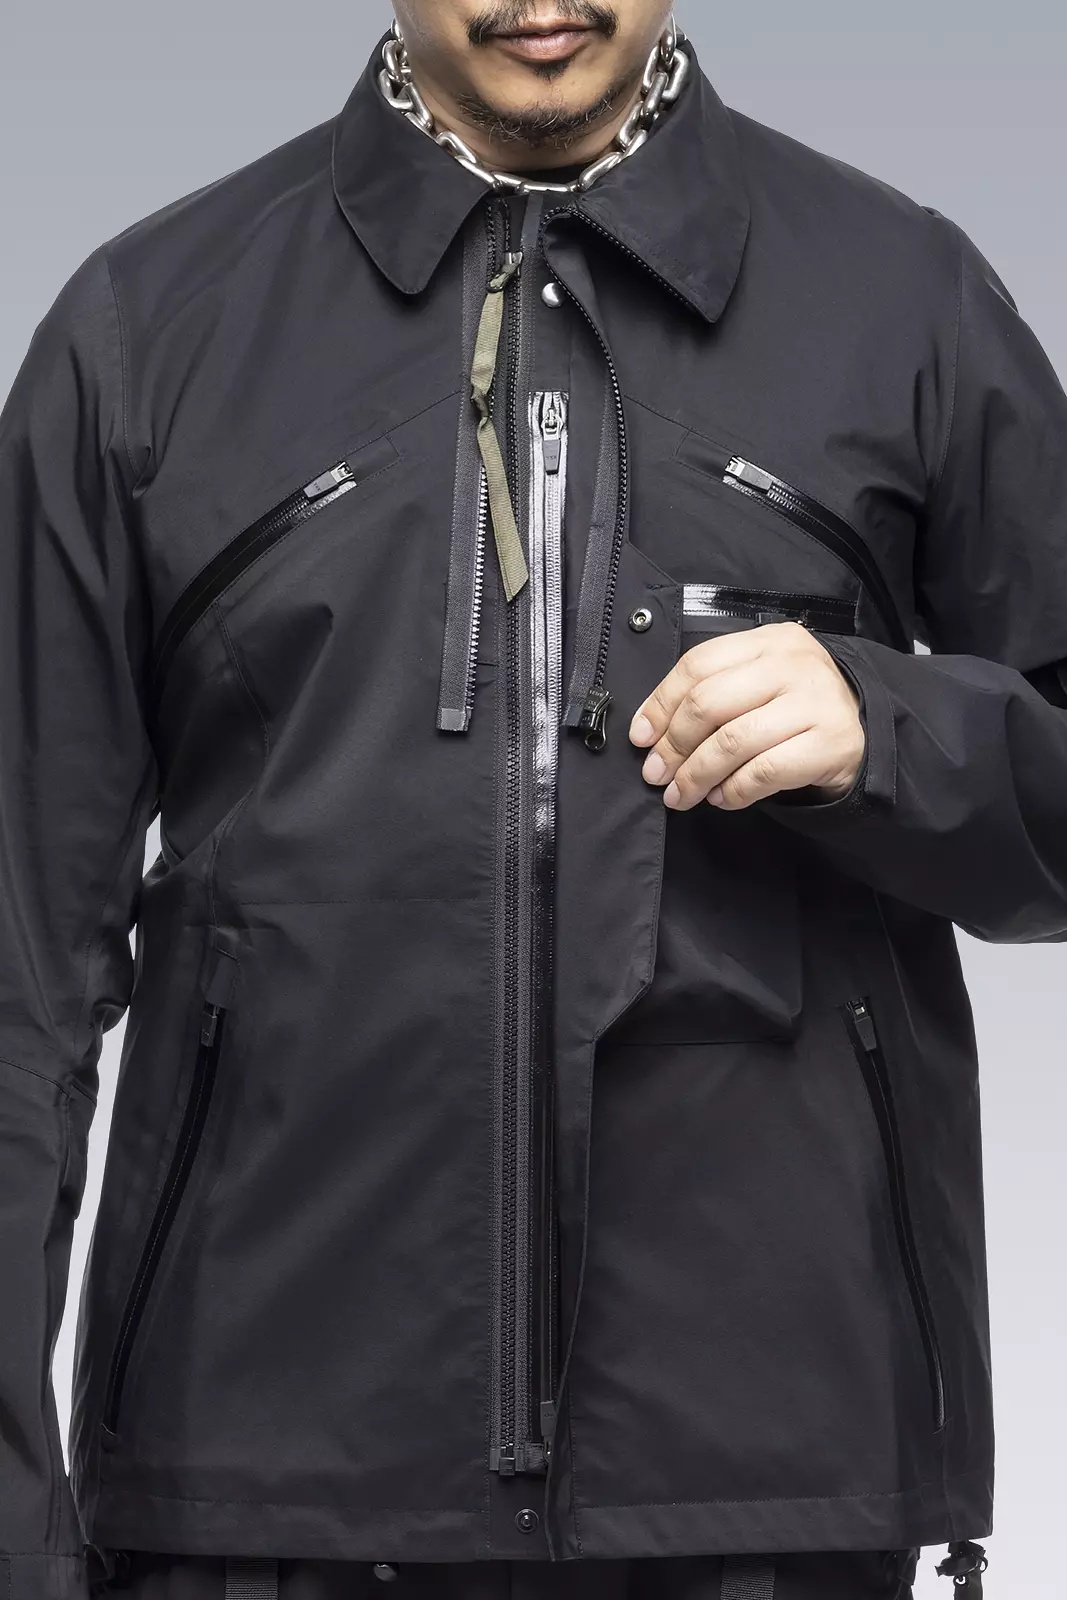 J1A-GTKR-BKS KR EX 3L Gore-Tex® Pro Interops Jacket Black with size 5 WR zippers in gloss black - 21